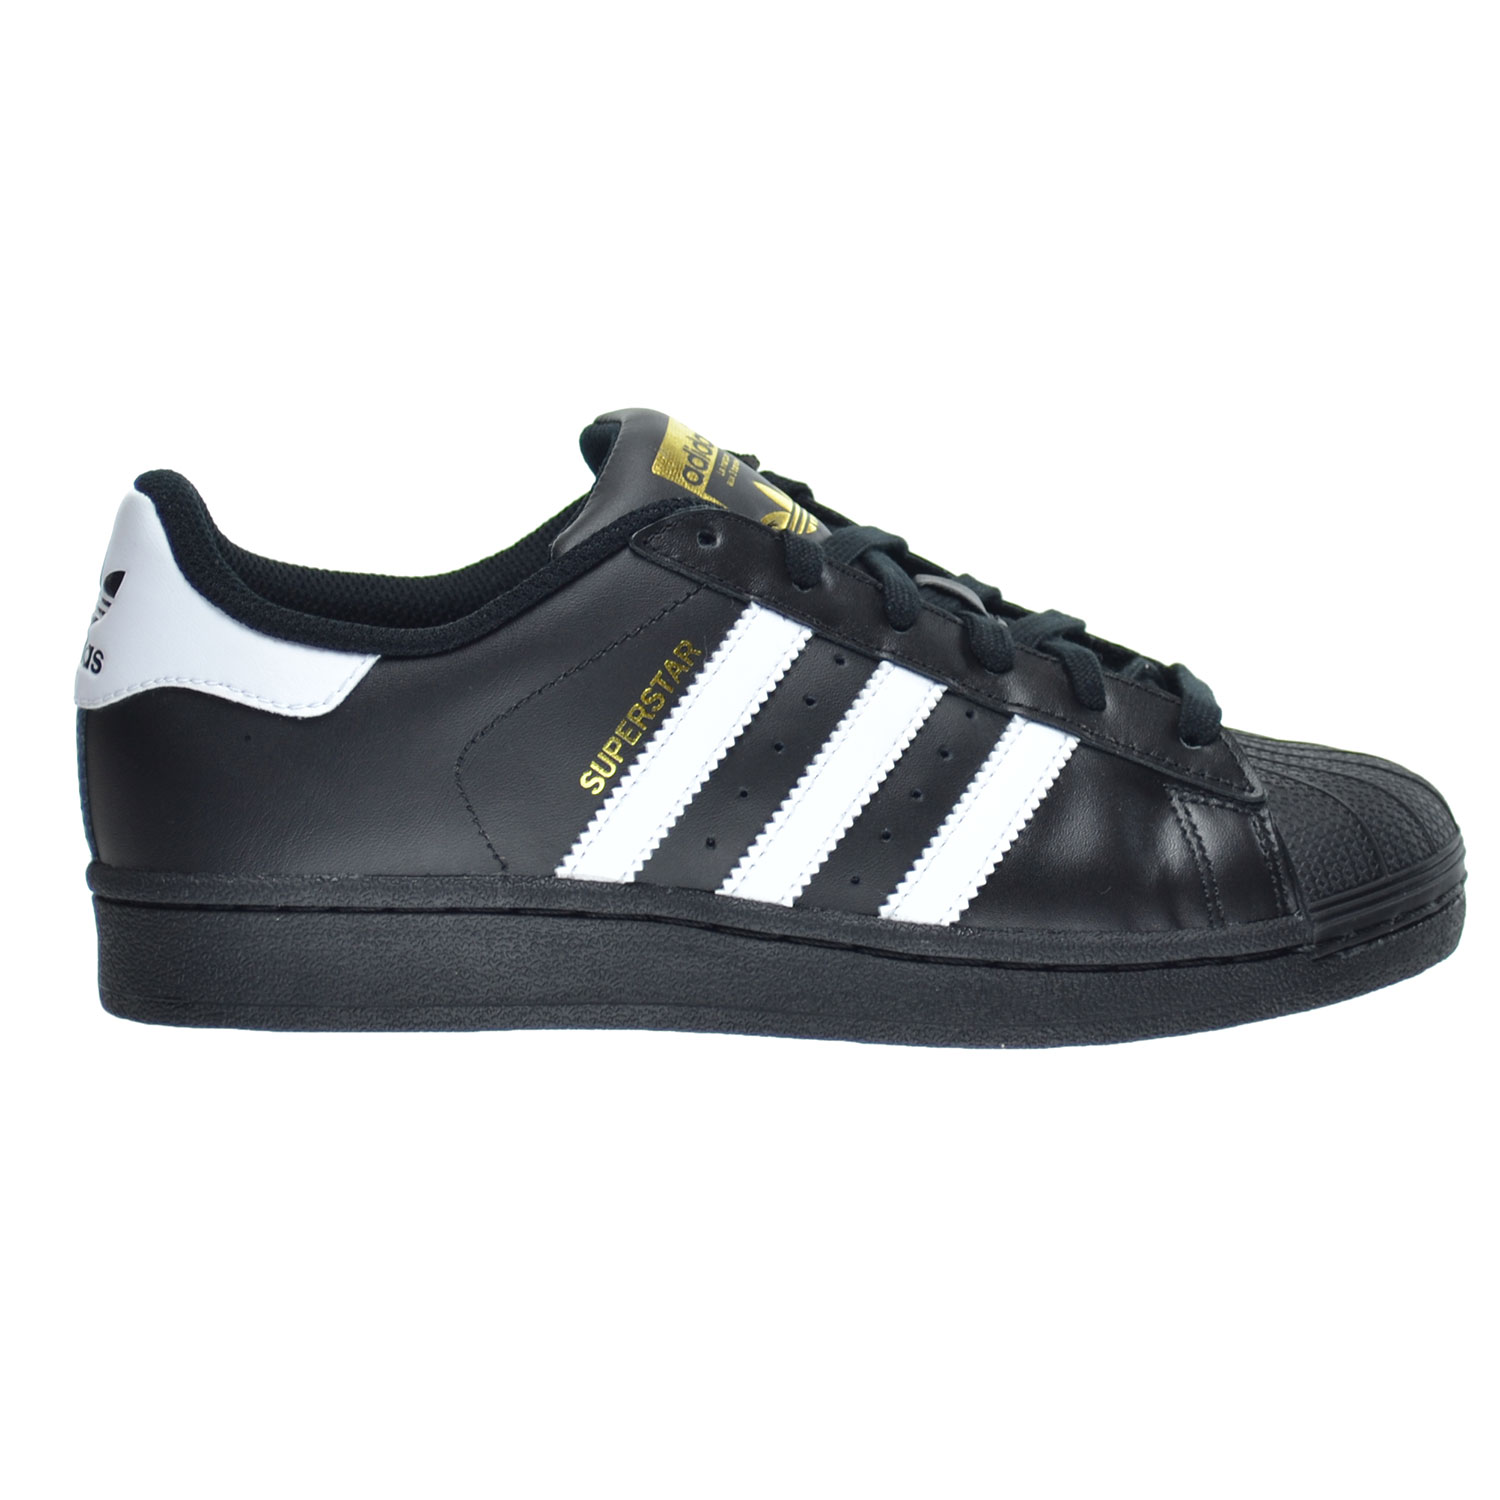 Adidas Superstar Foundation J Big Kid's Shoes Core Black-FTW White b23642 |  eBay